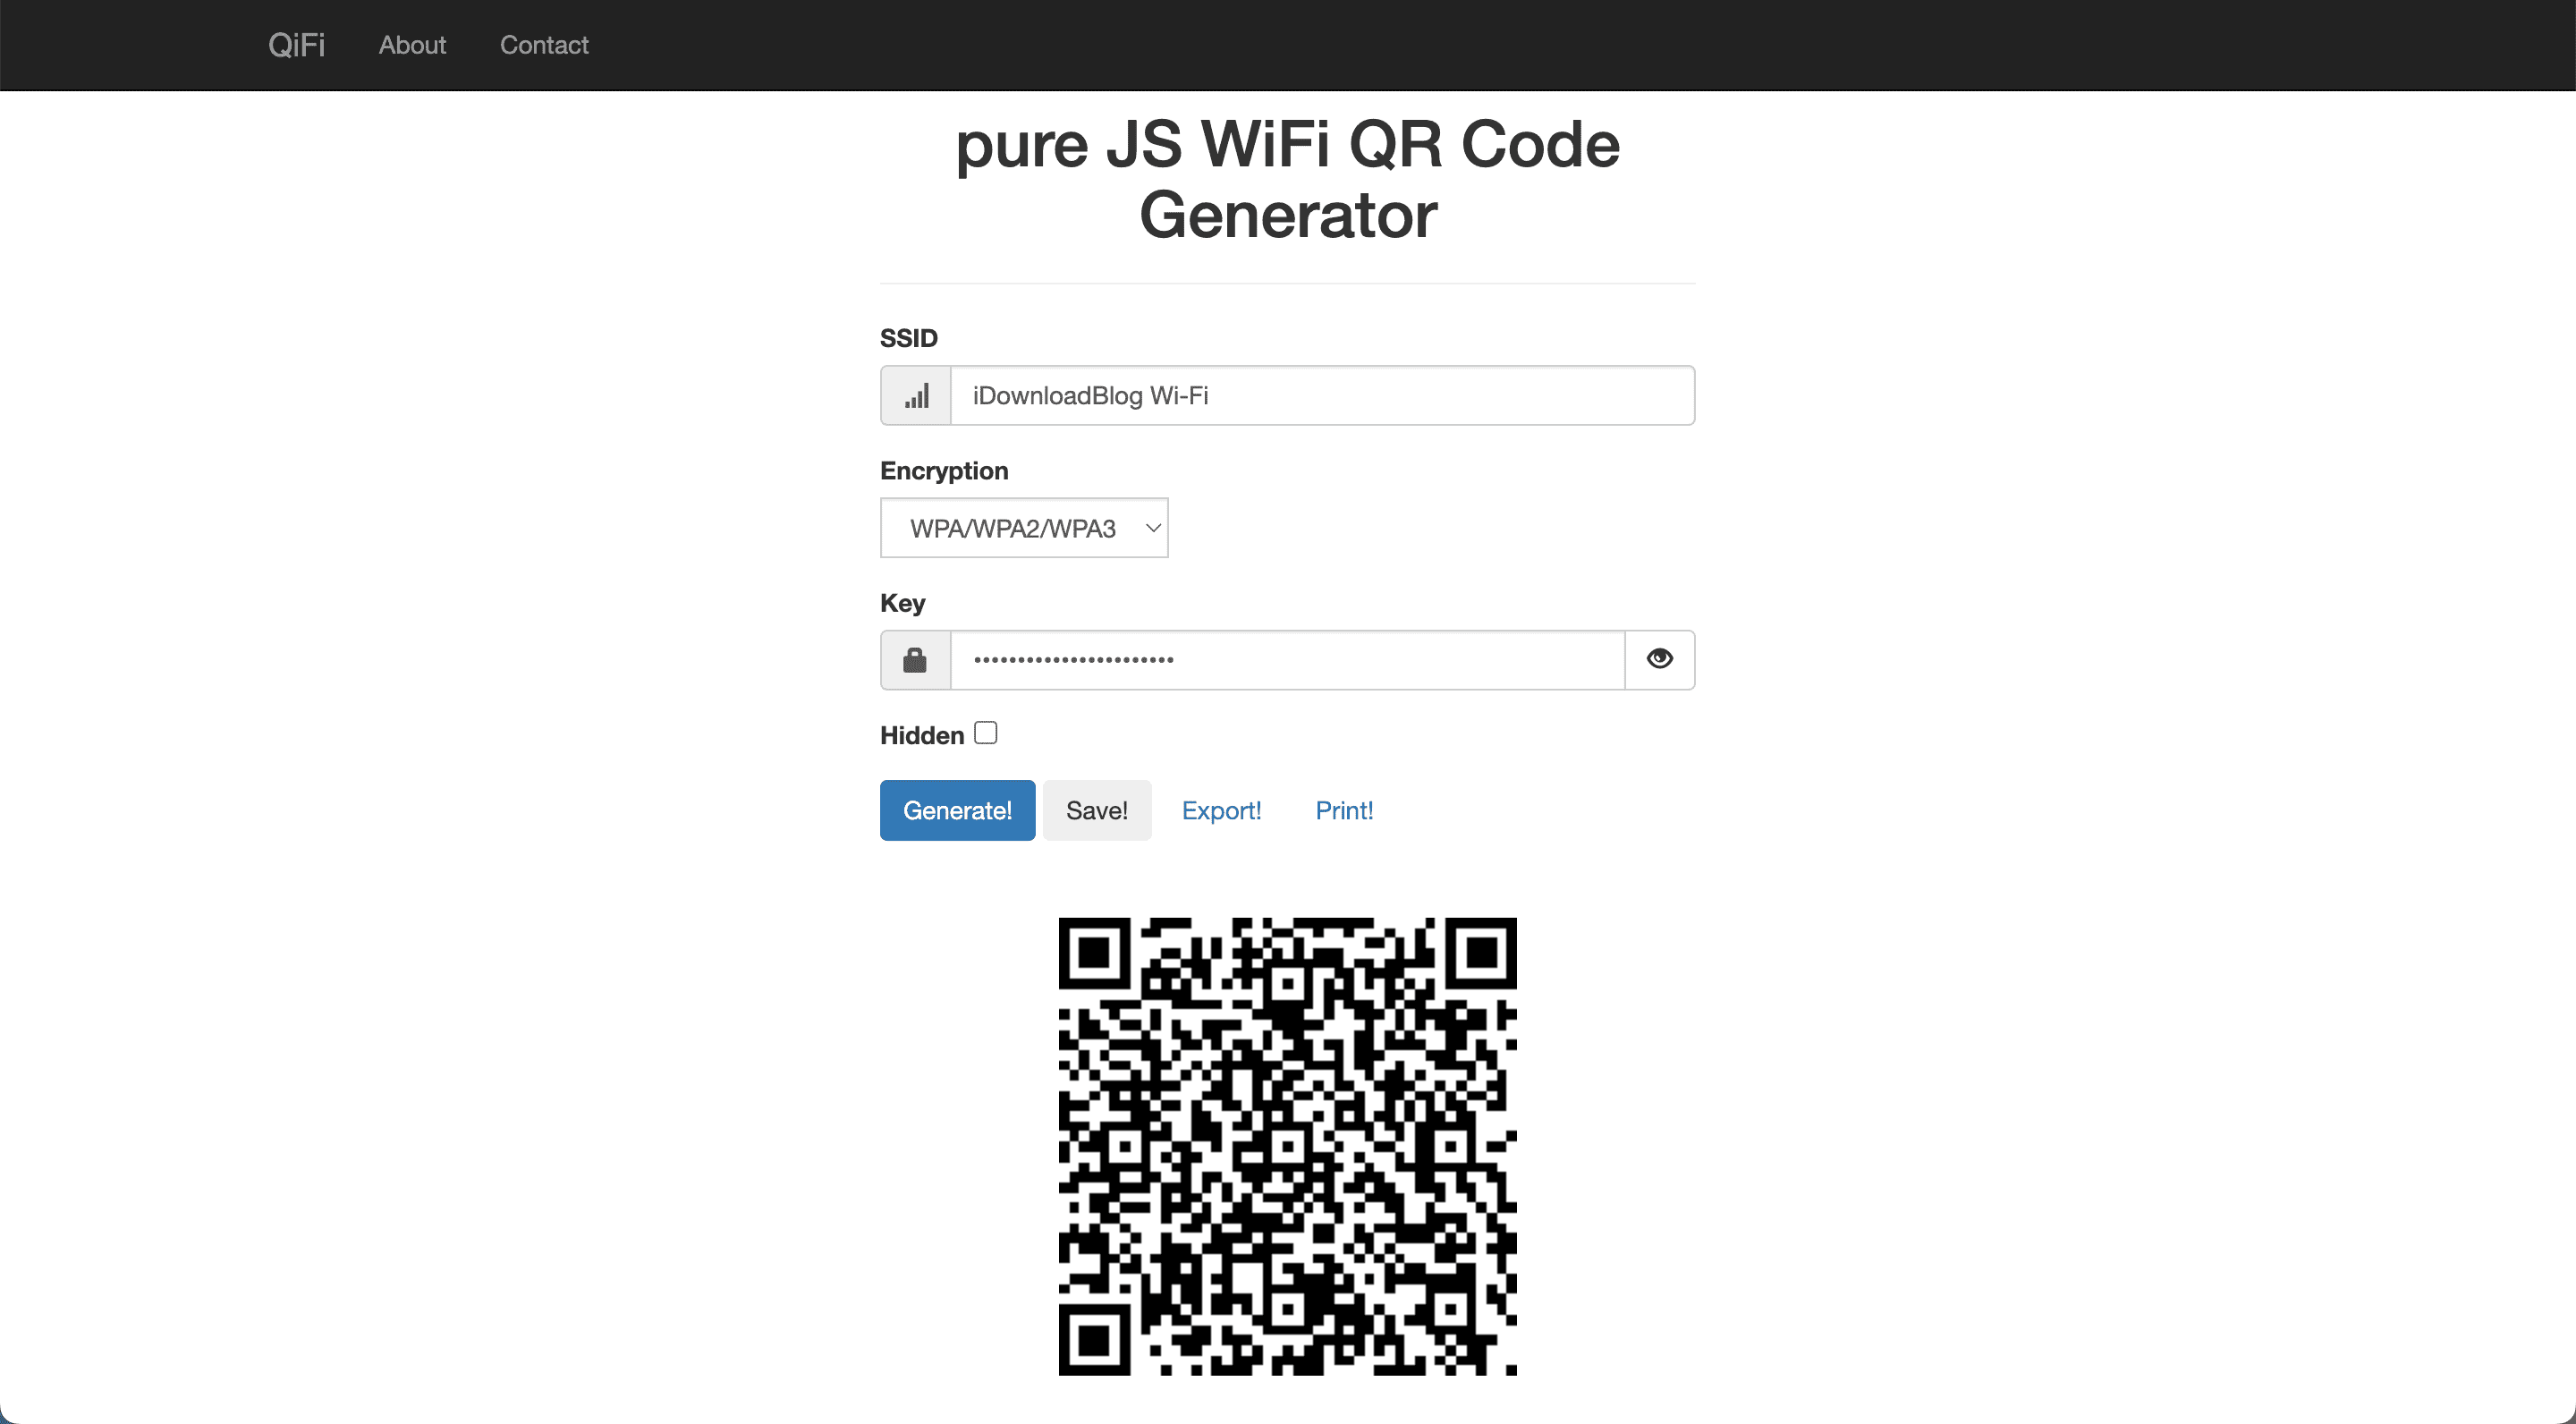 WiFi QR Code generator